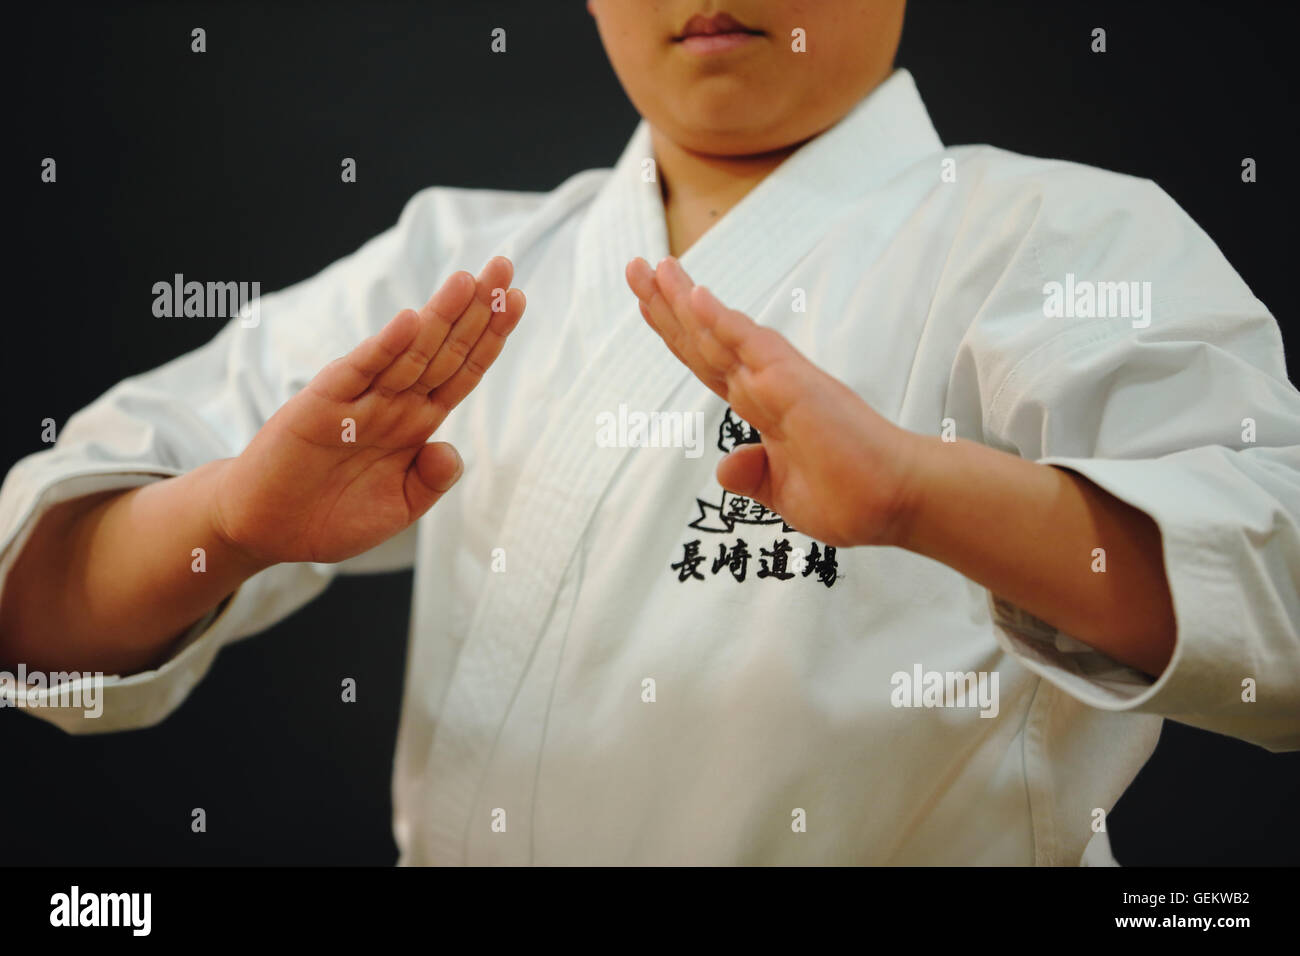 Japanese kid in karate uniform on black background Stock Photo